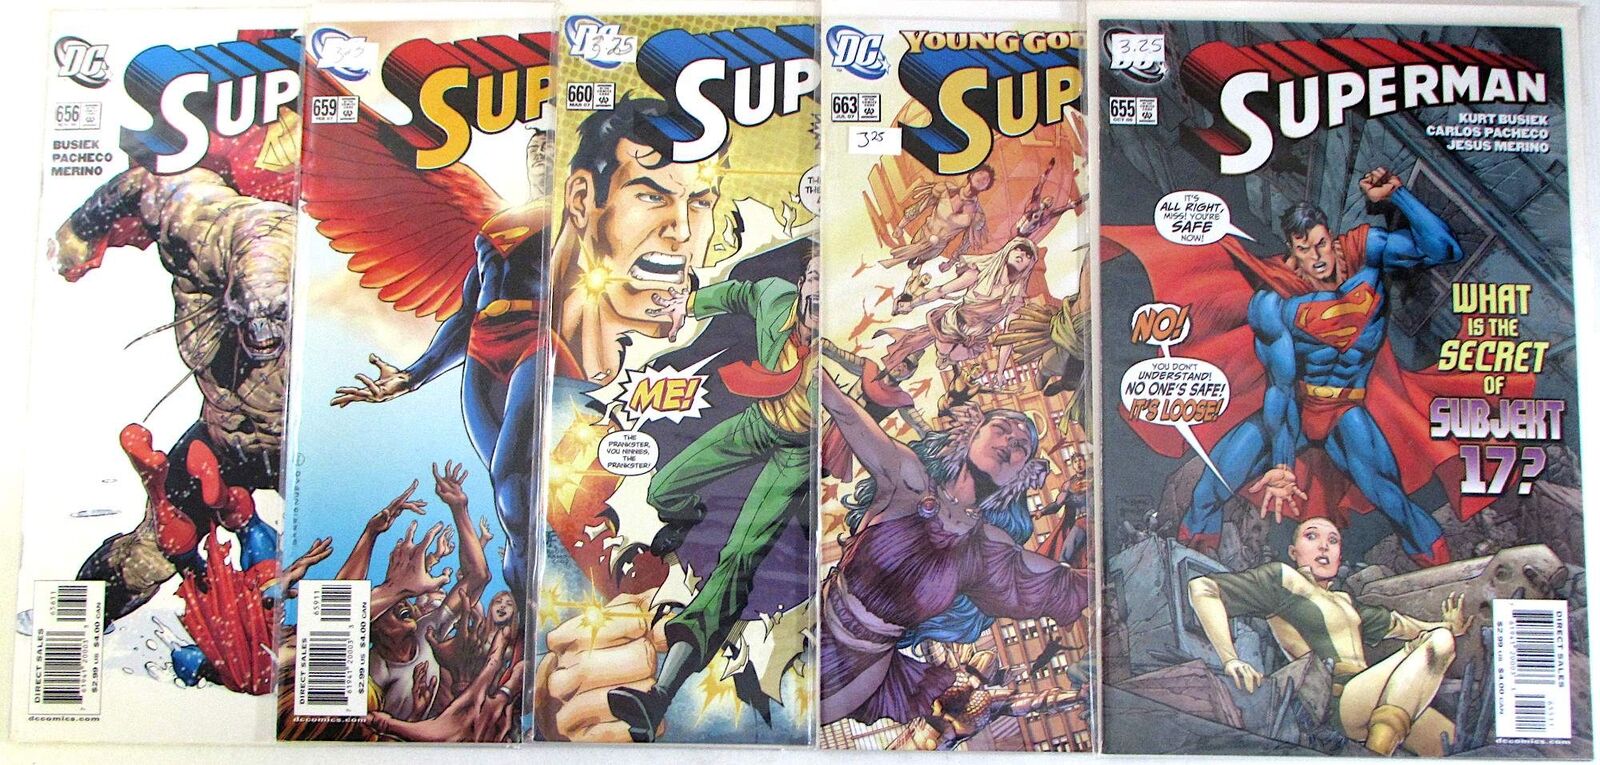 Superman Lot of 5 #656,649,660,663,655 DC (2006) 2nd Series Comic Books